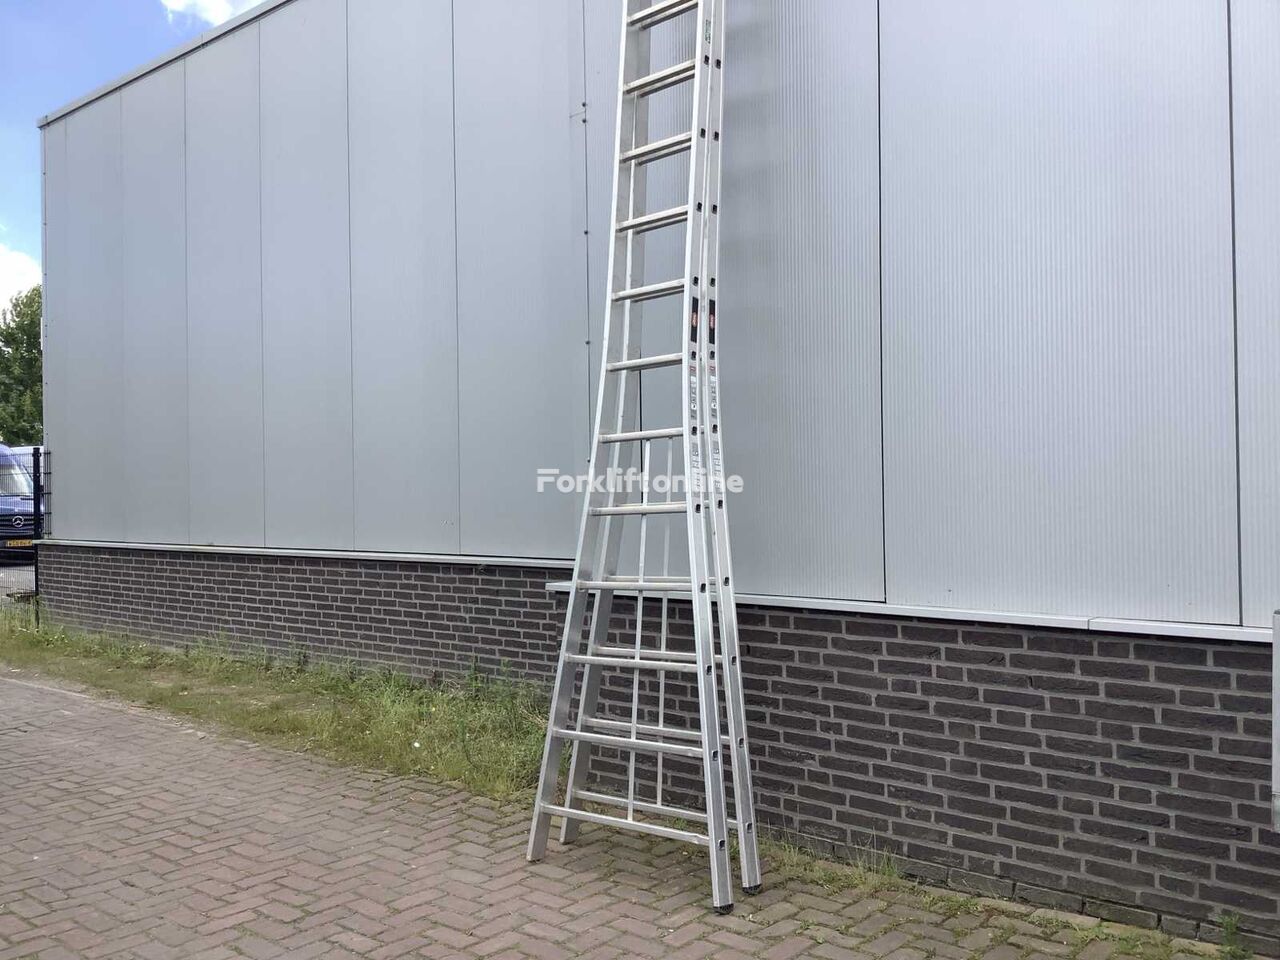 Altrex Keu 1x16 warehouse ladder